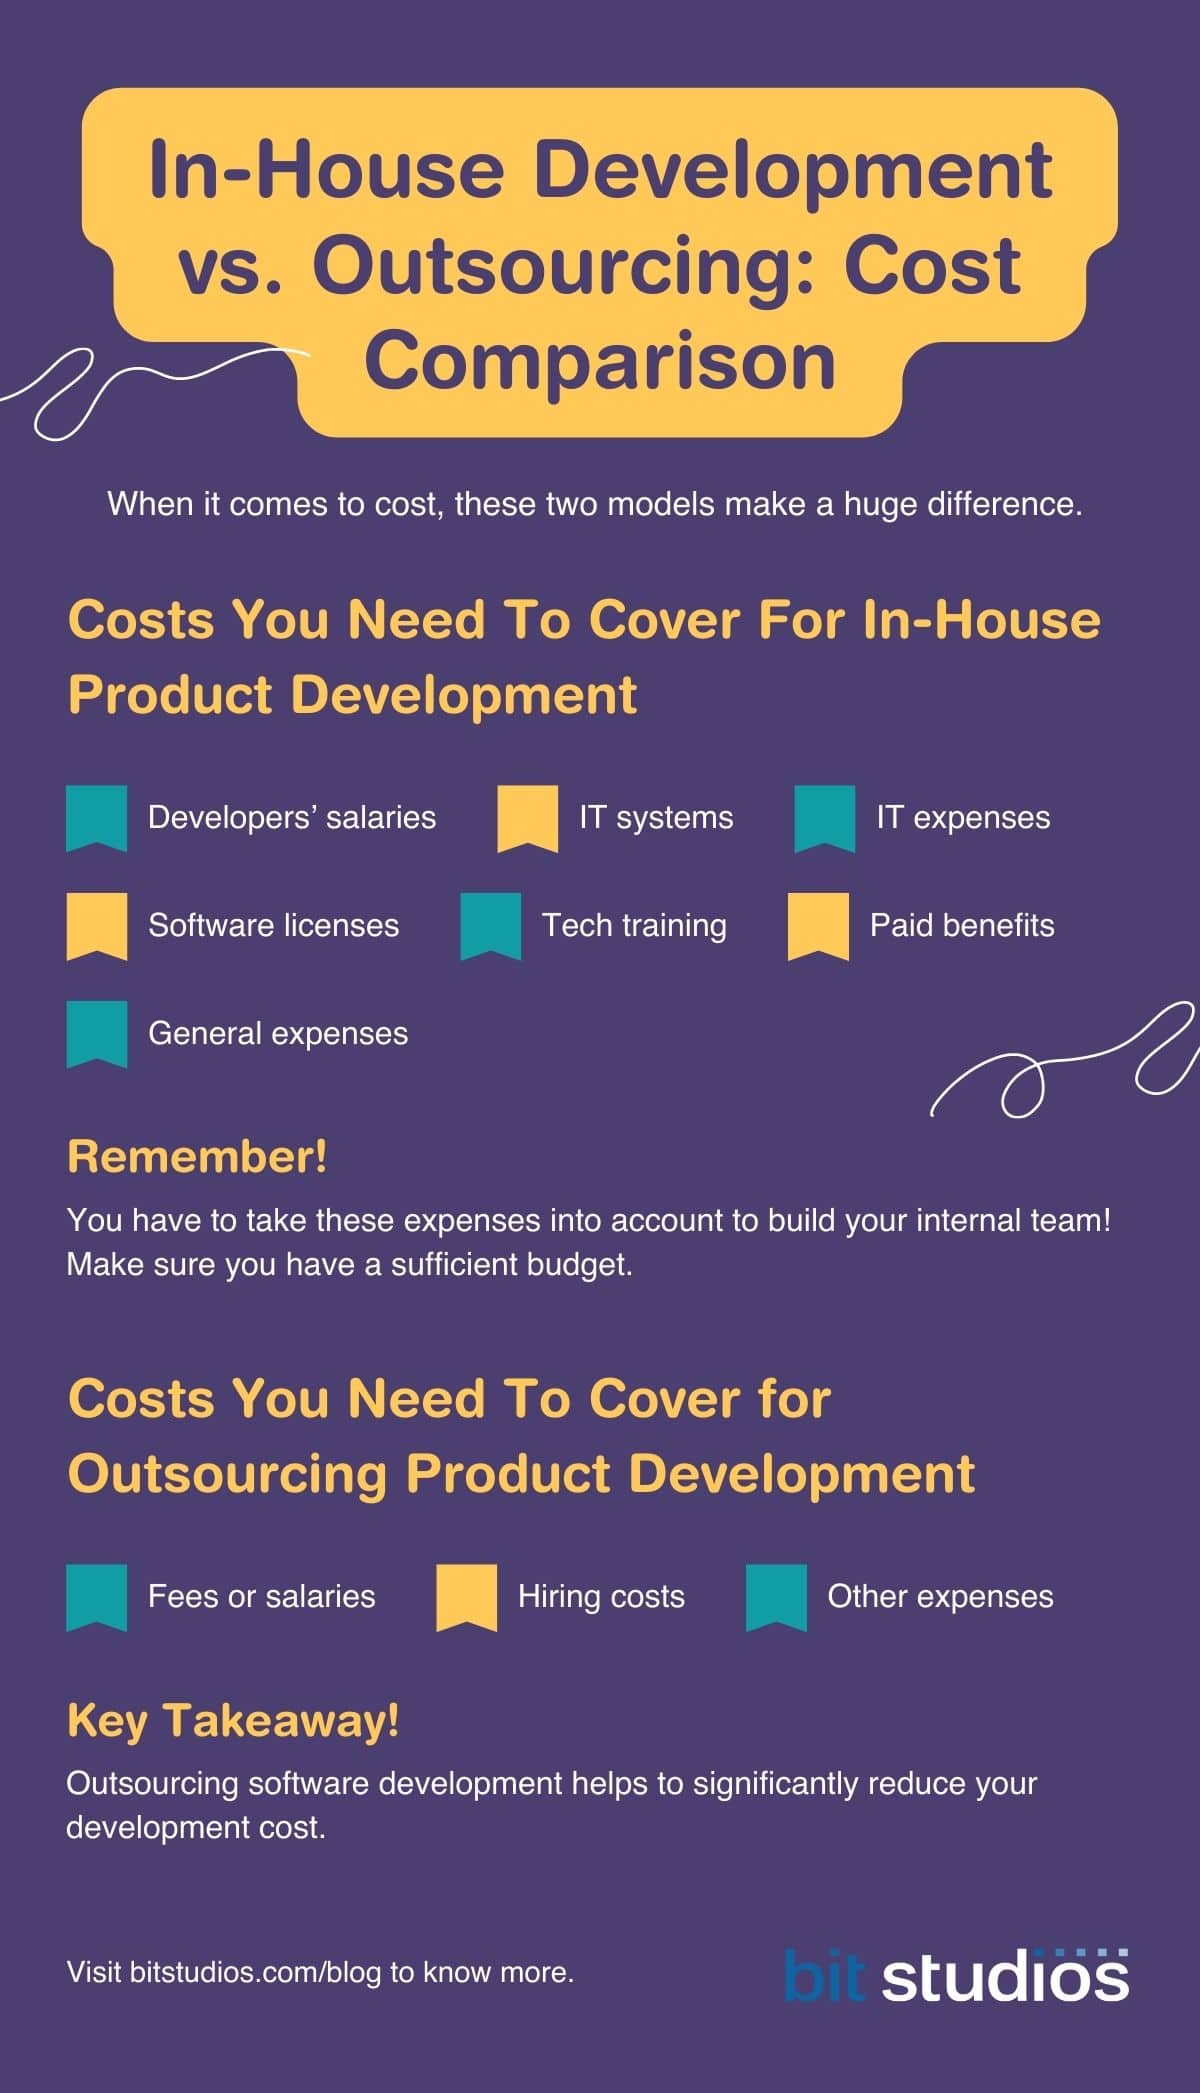 In-house Development vs. Outsourcing: Cost Comparison